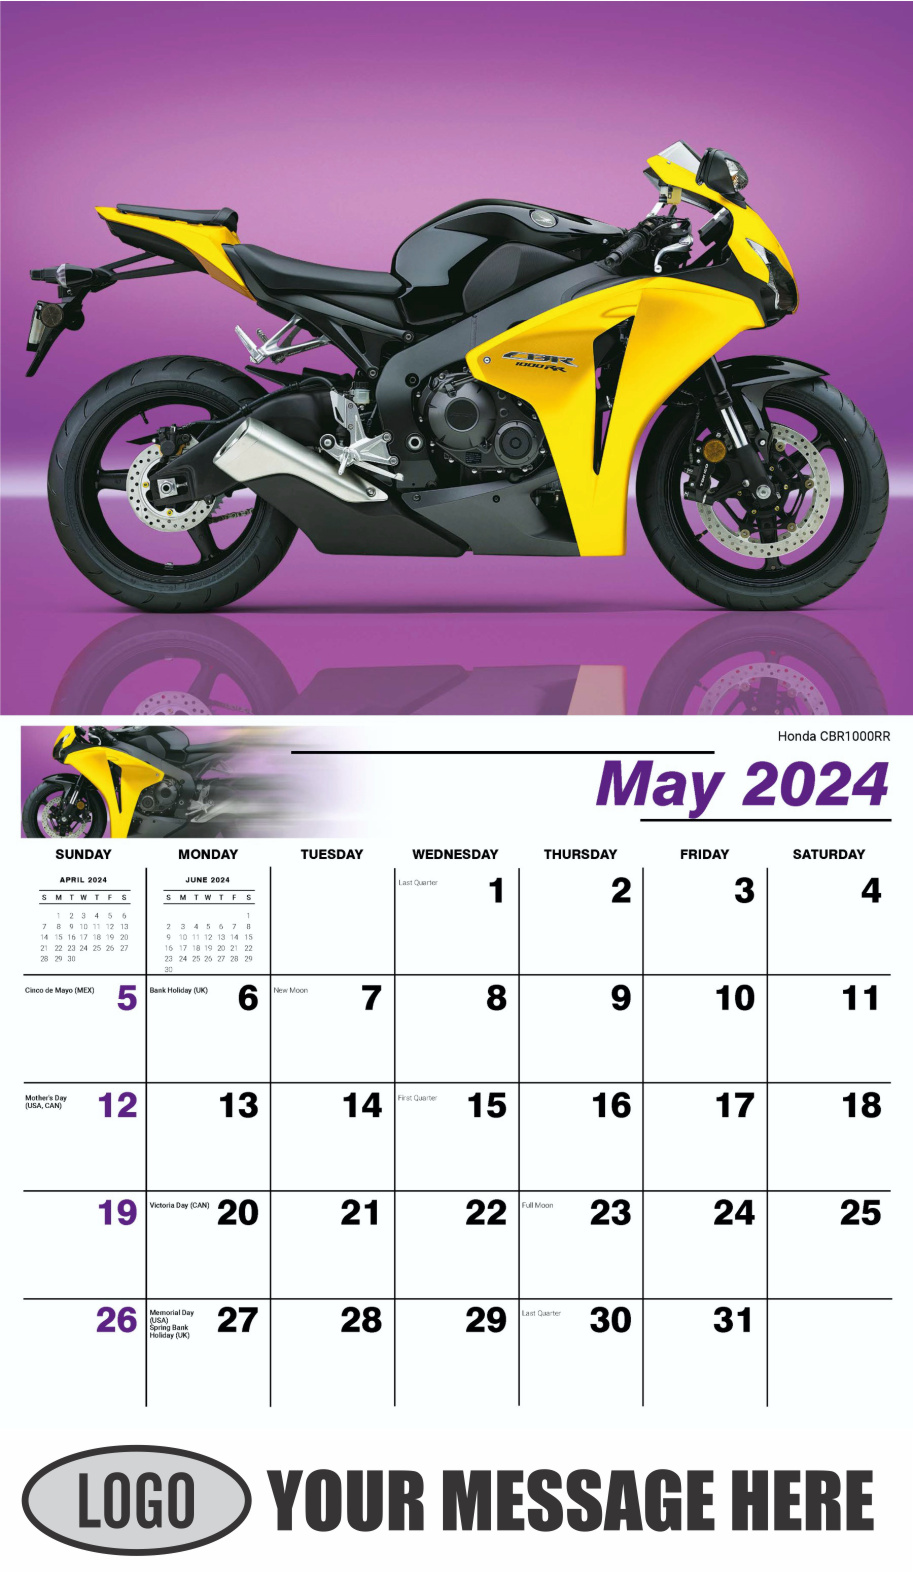 Motorcycle Mania 2024 Automotve Business Advertising Wall Calendar - May